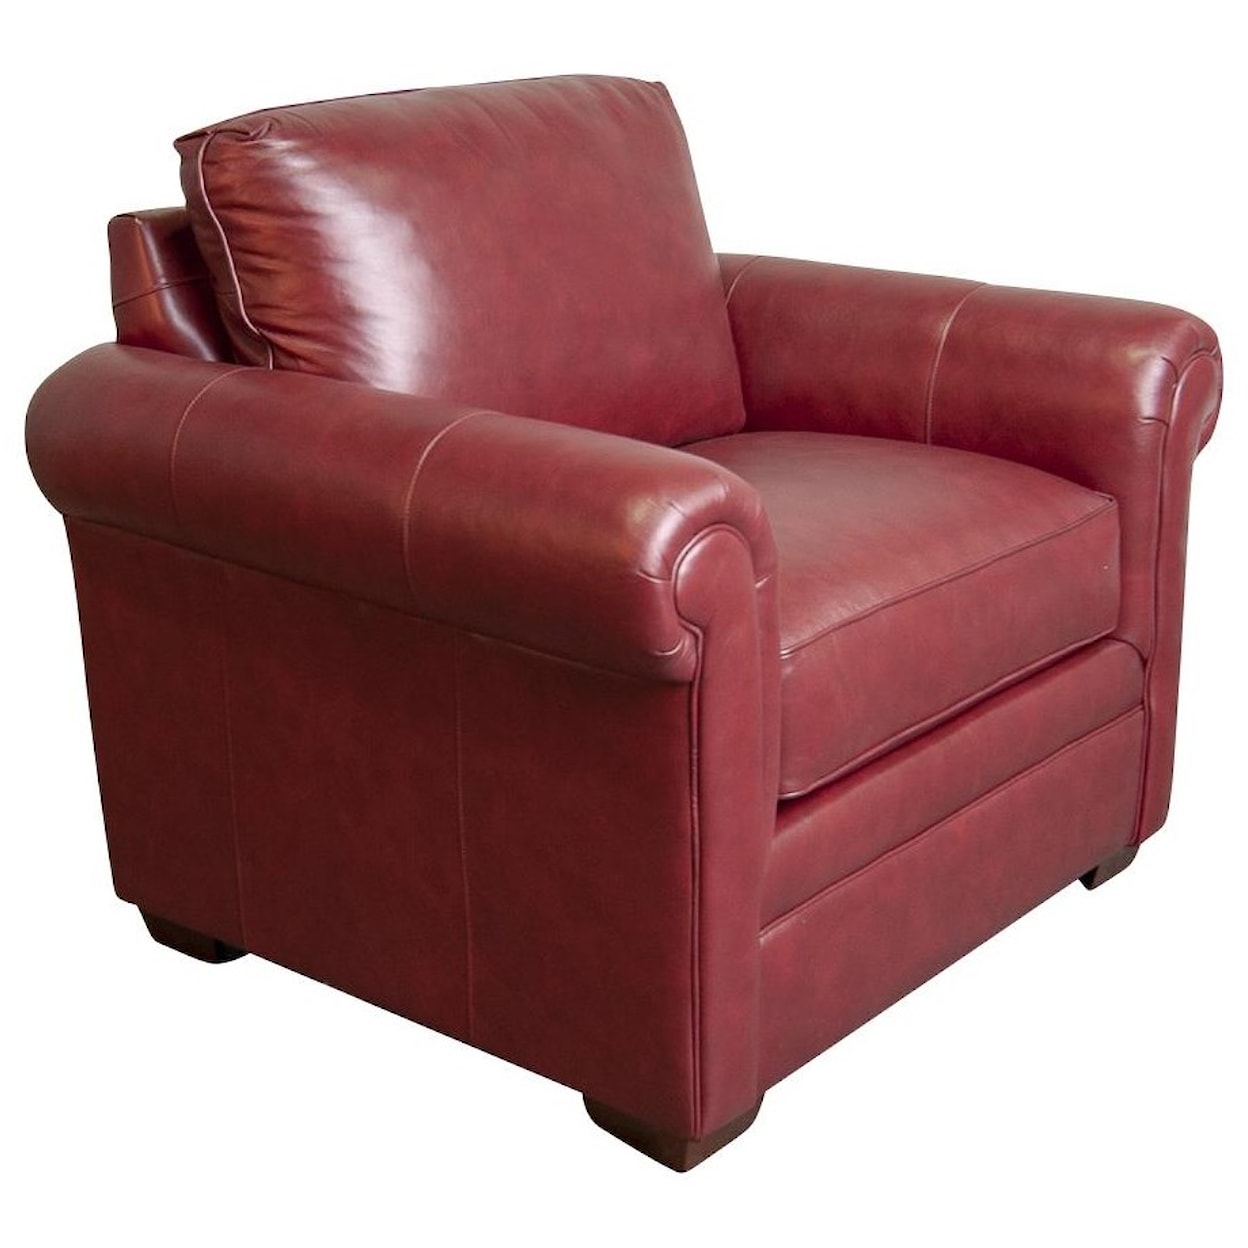 Craftmaster Bjorn Bjorn Leather Chair